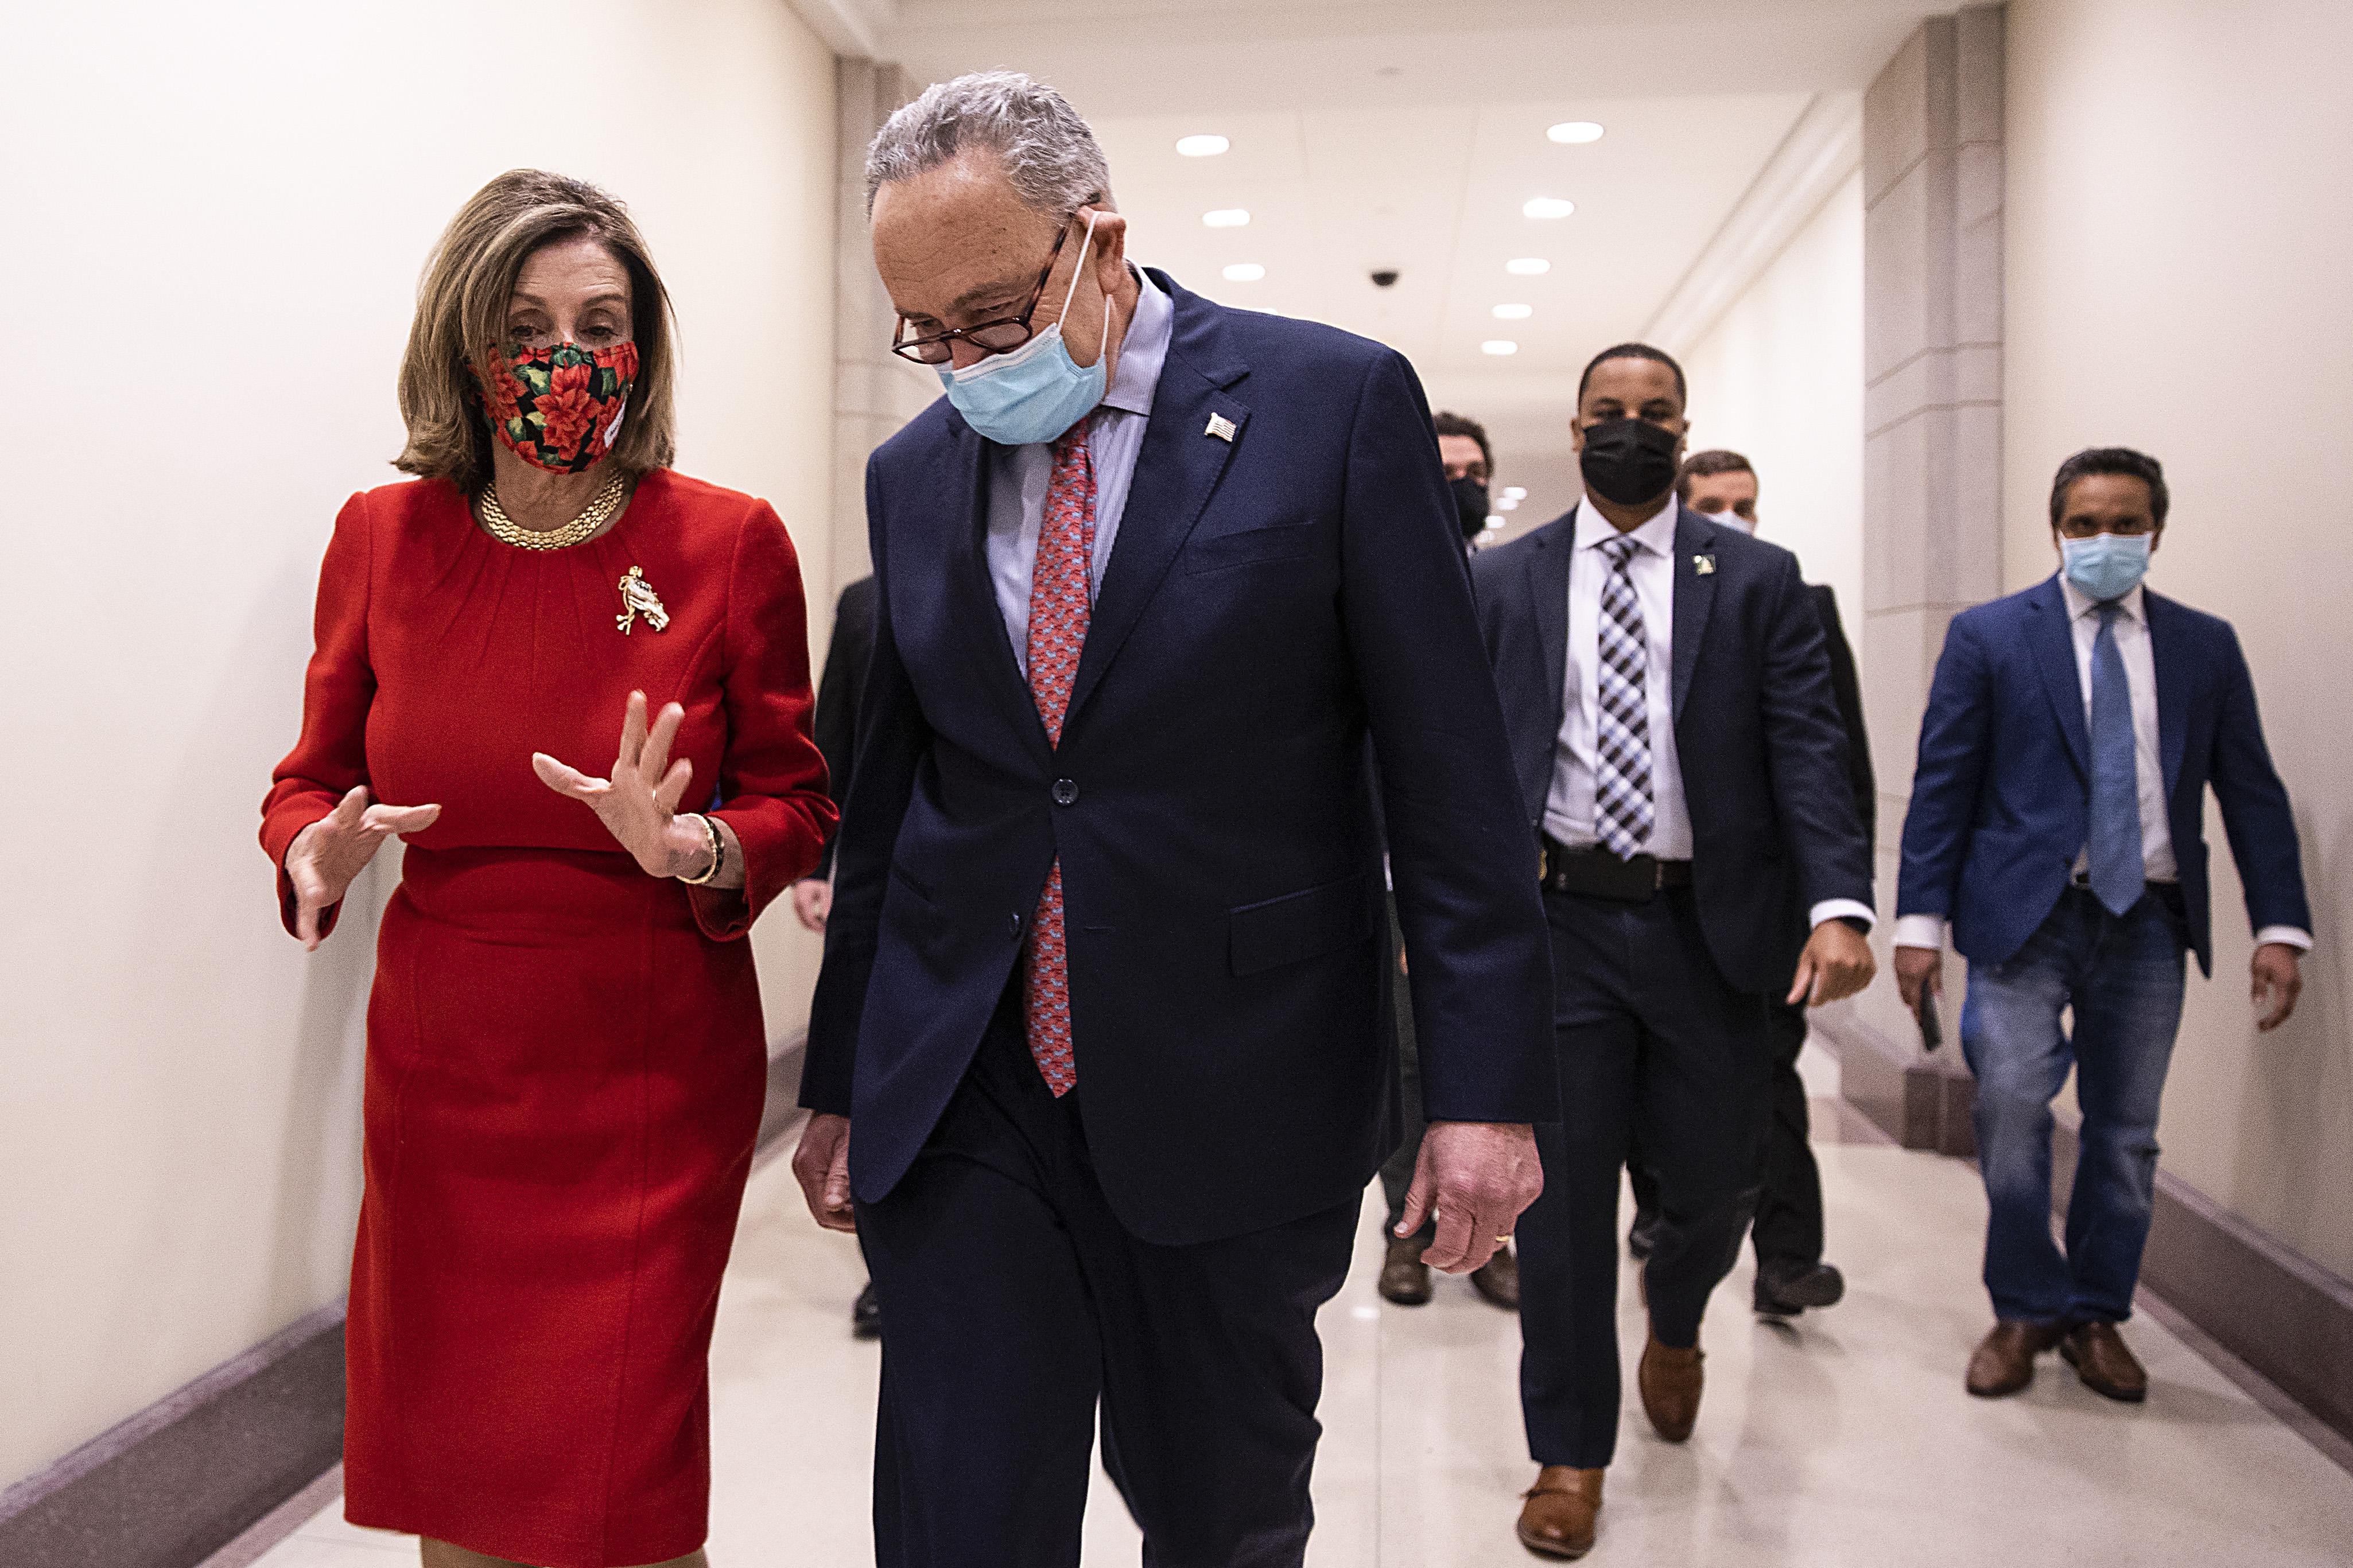 Nancy Pelosi talks to Chuck Schumer as they walk down a hallway together